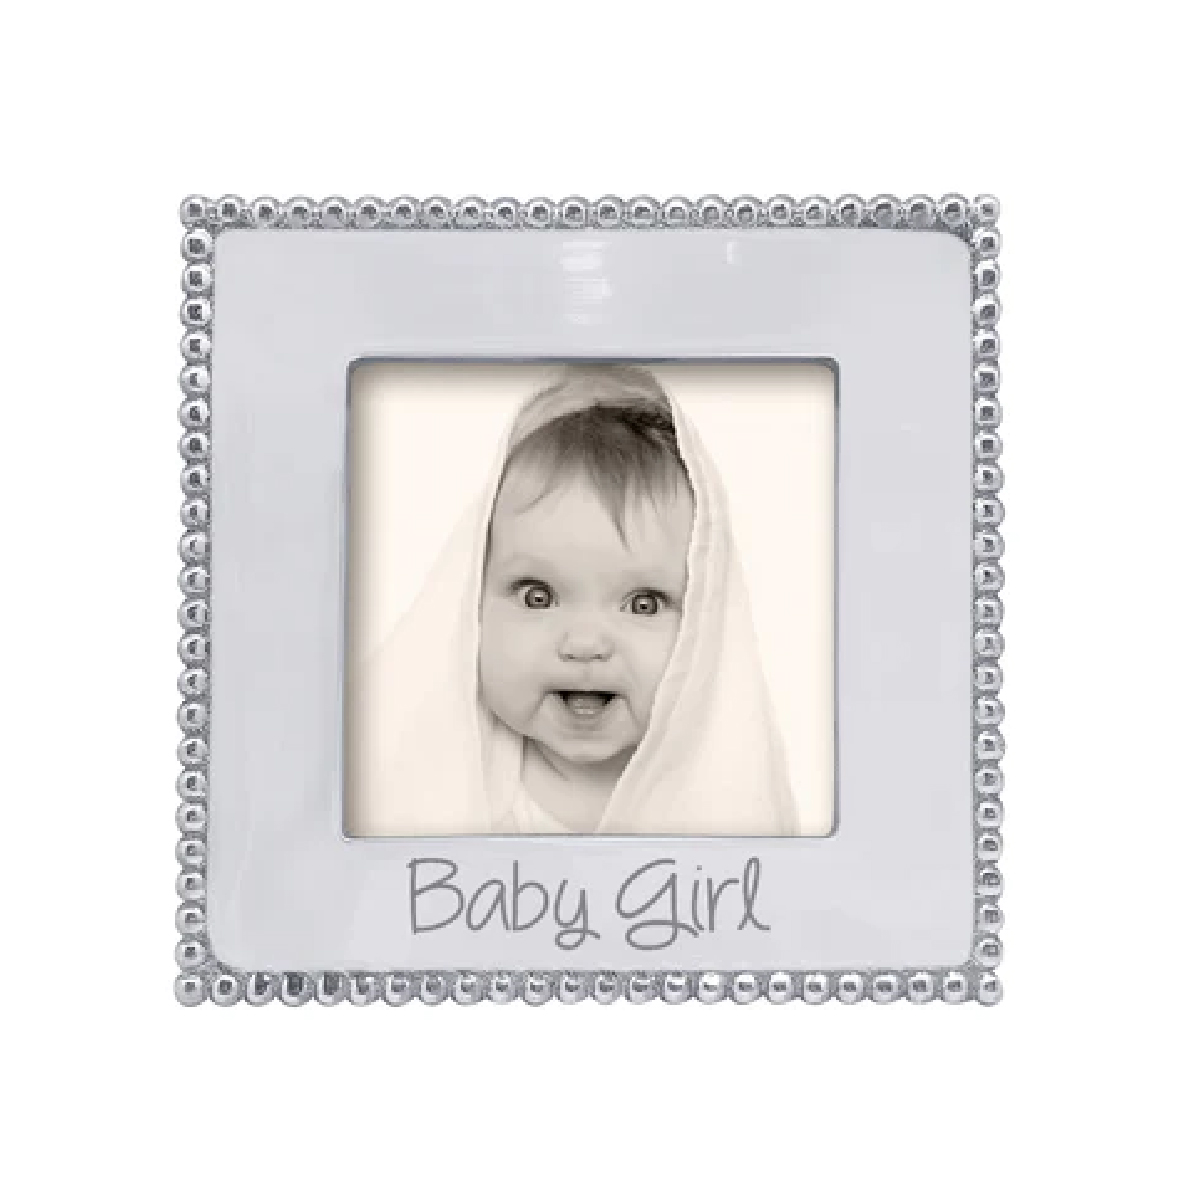 Mariposa - "Baby Girl" 4x4 Beaded Frame